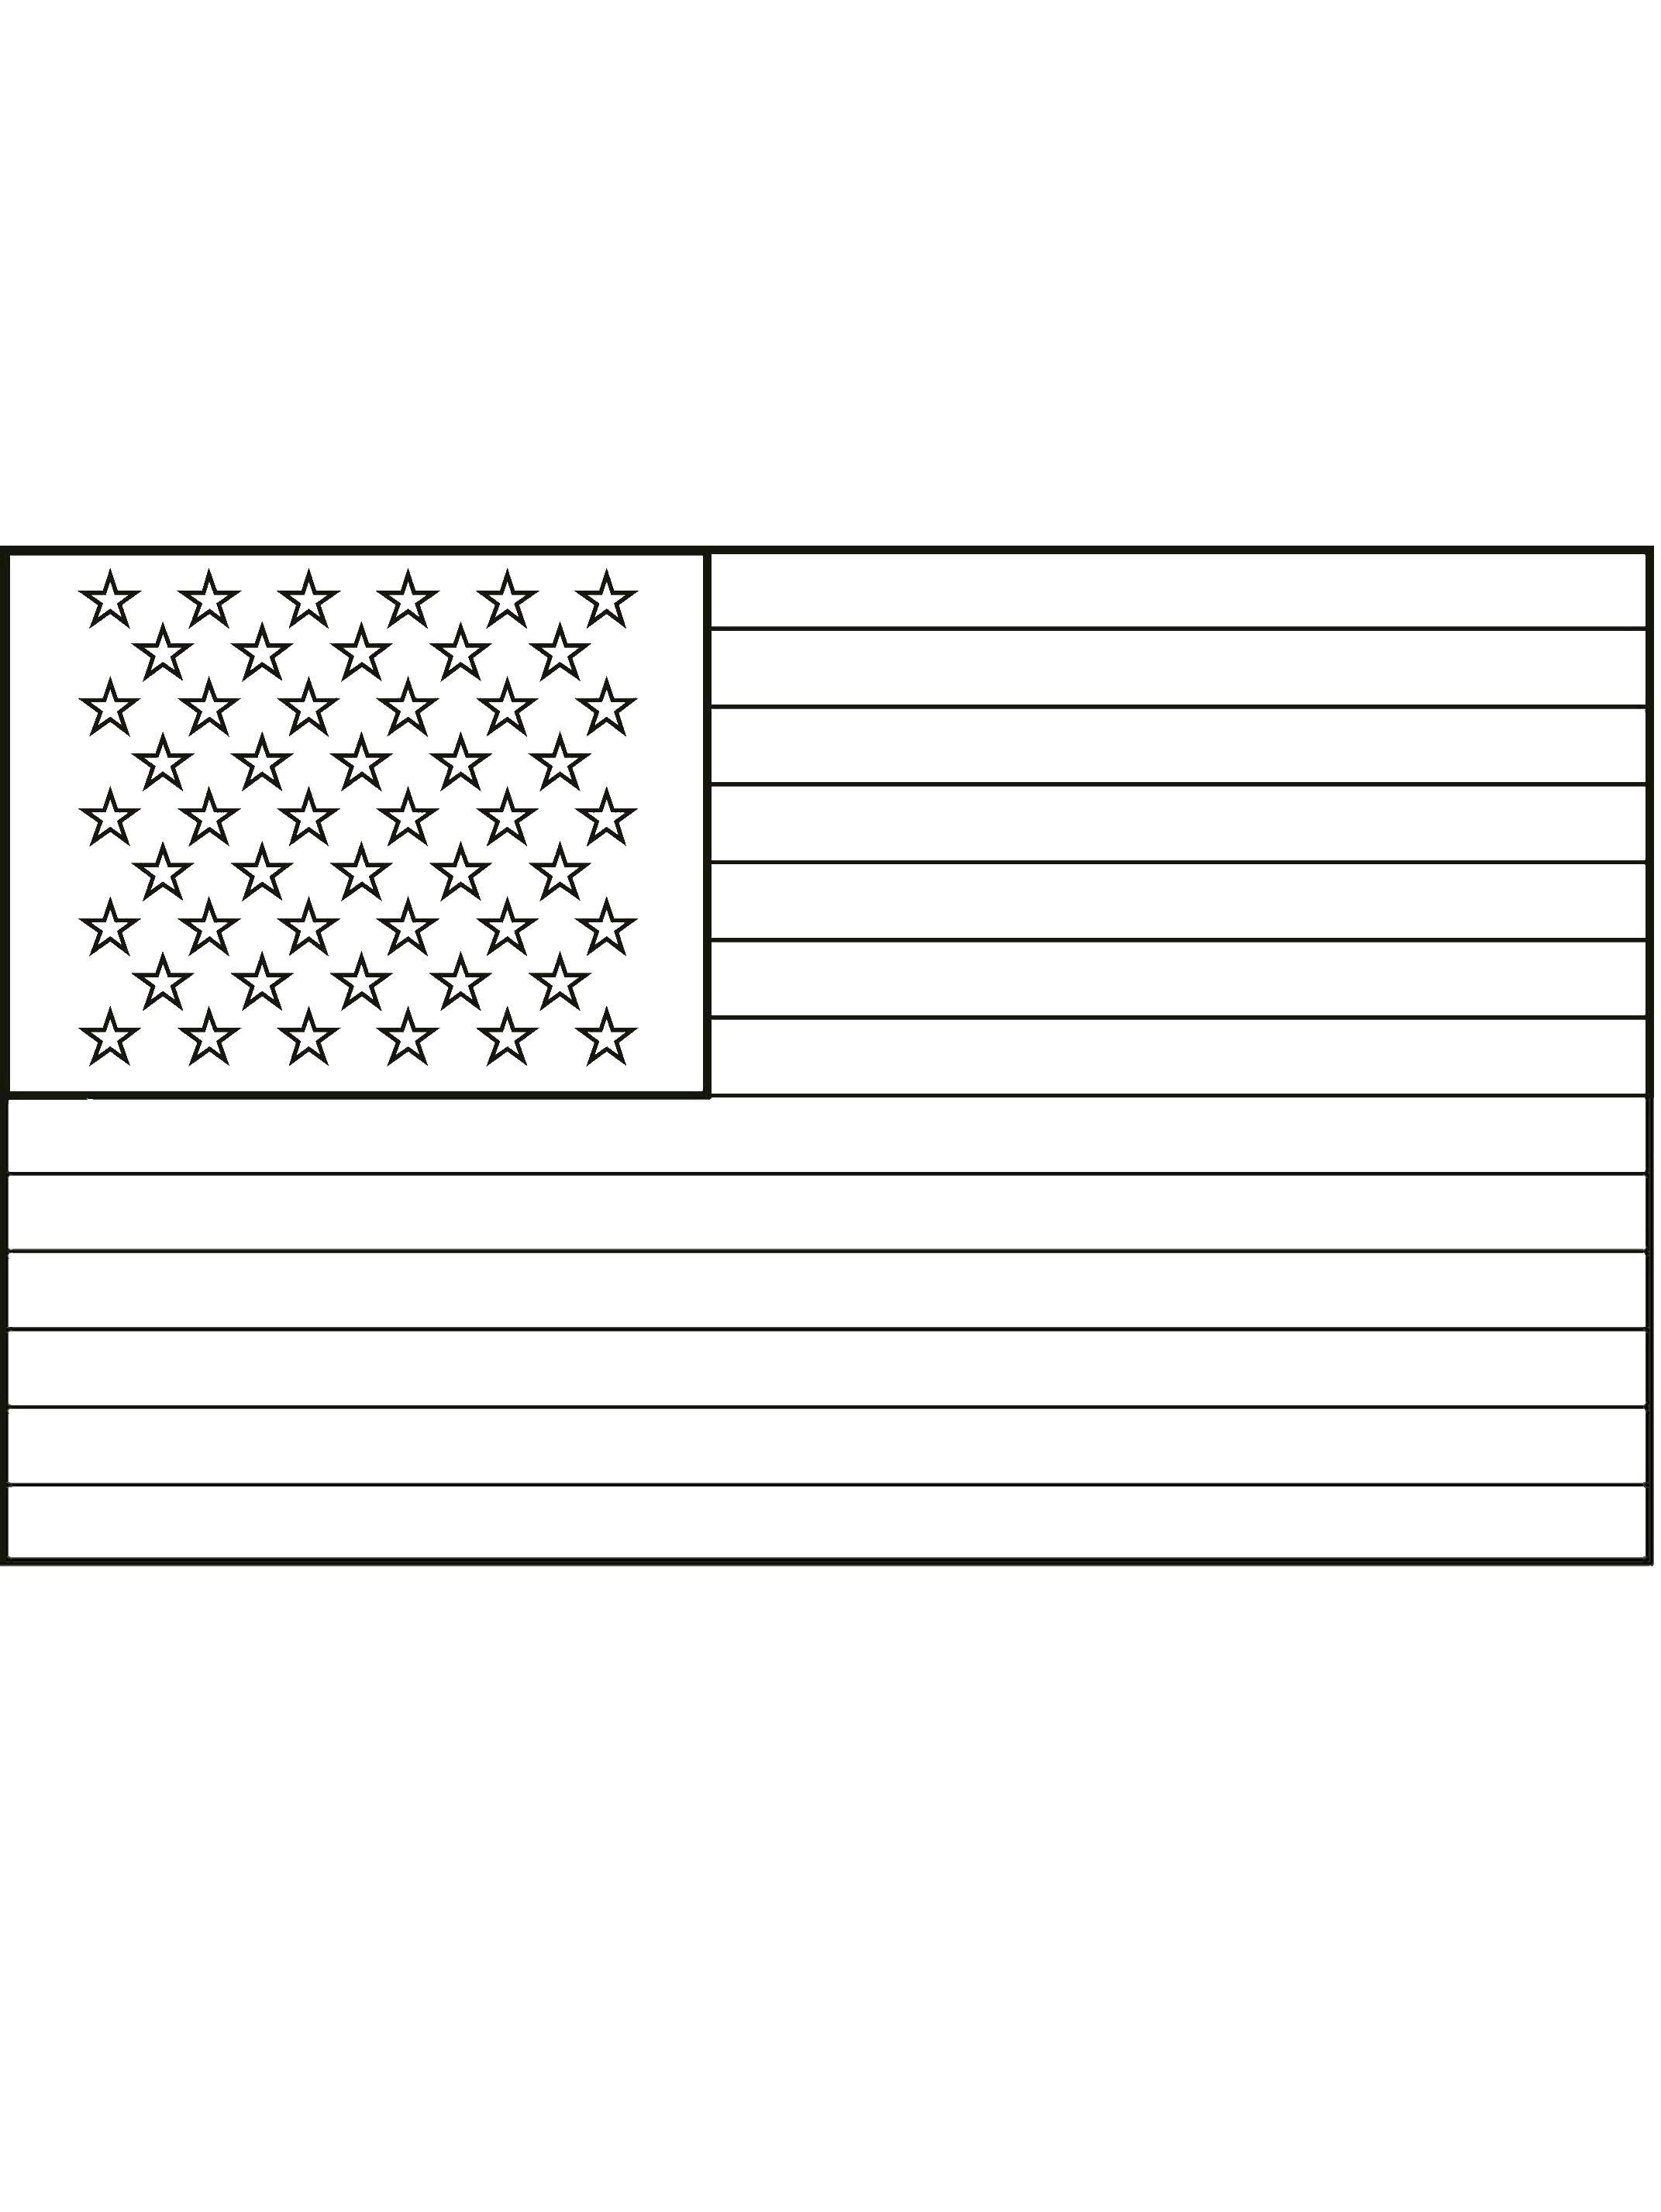 Coloring USA flag. Category Flags. Tags:  flag, USA, America.